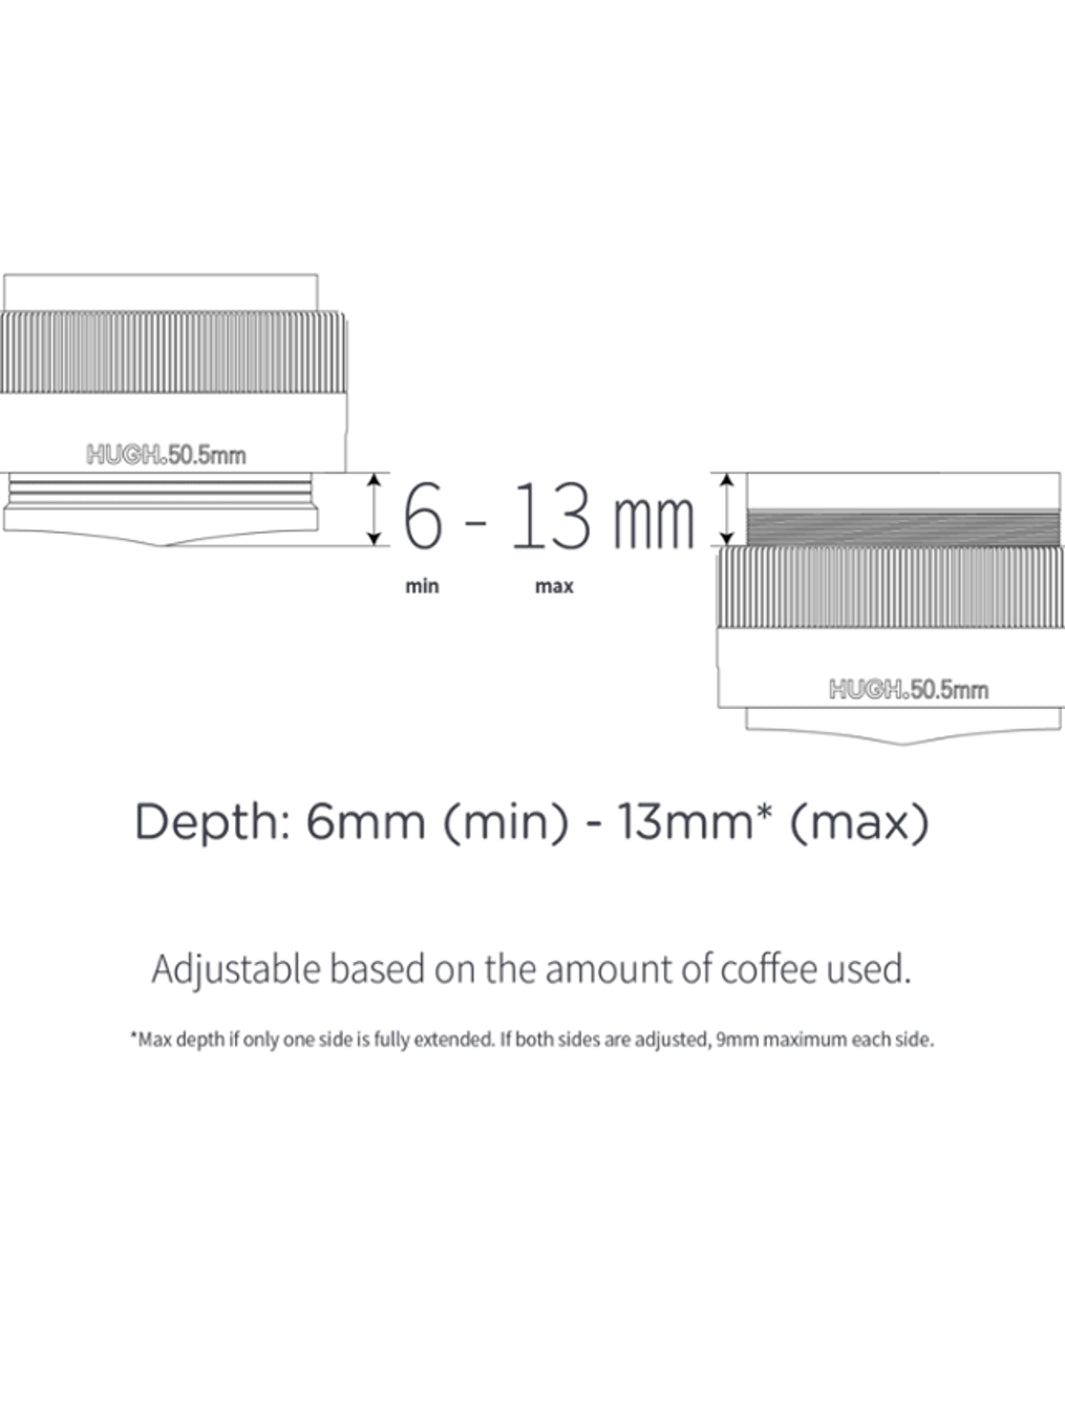 HUGH Adjustable Depth Dual Head Tamper & Distributor (50.5mm)